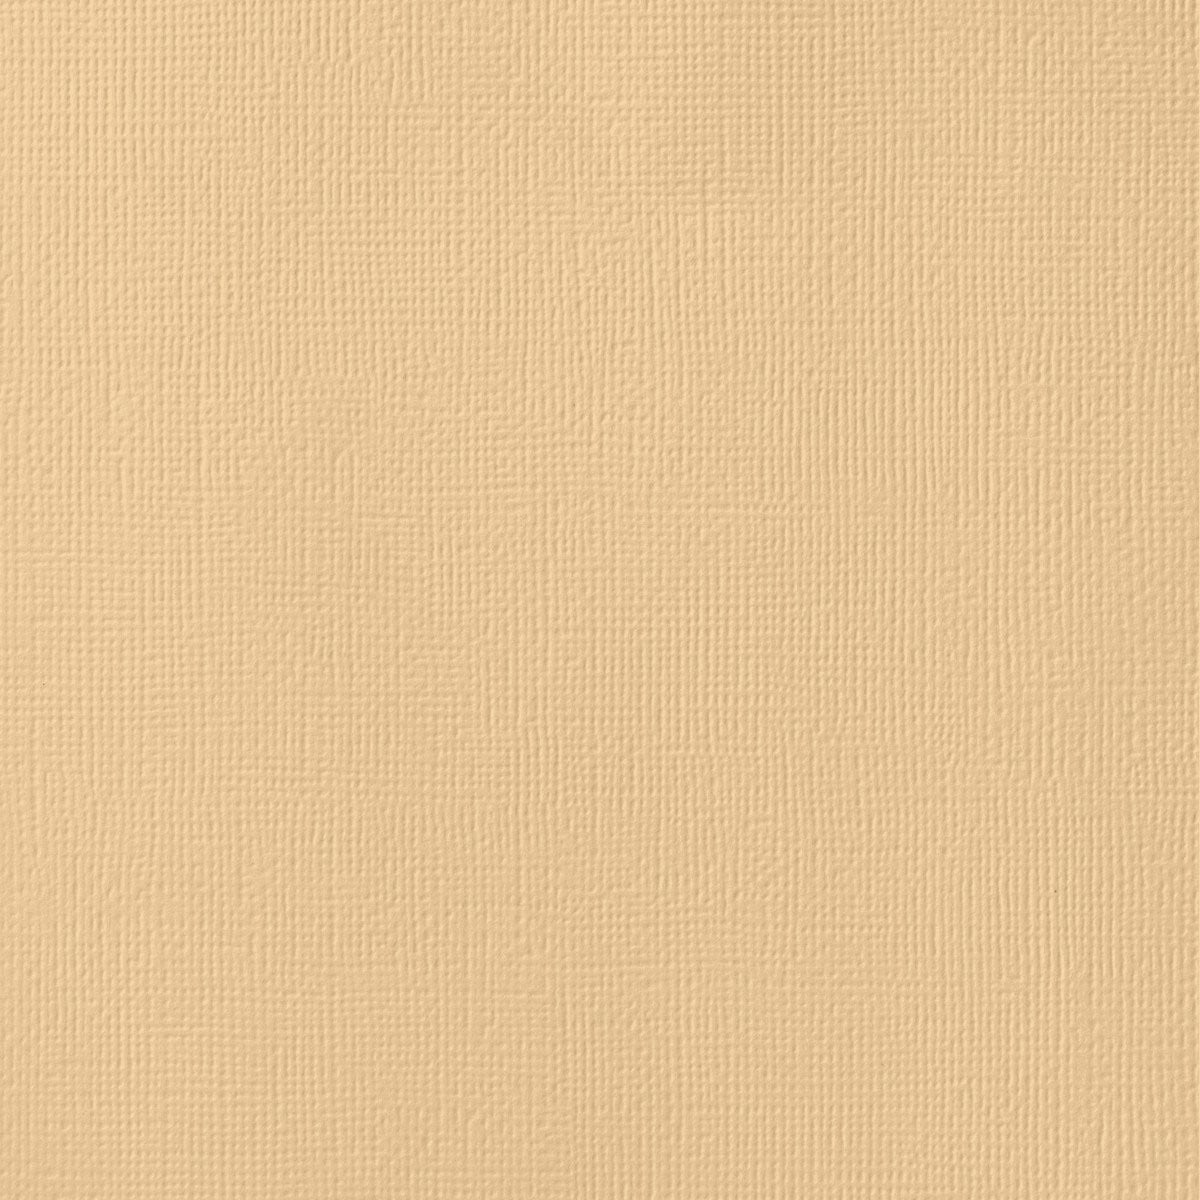 LATTE tan cardstock - 12x12 inch - 80 lb - textured scrapbook paper - American Crafts